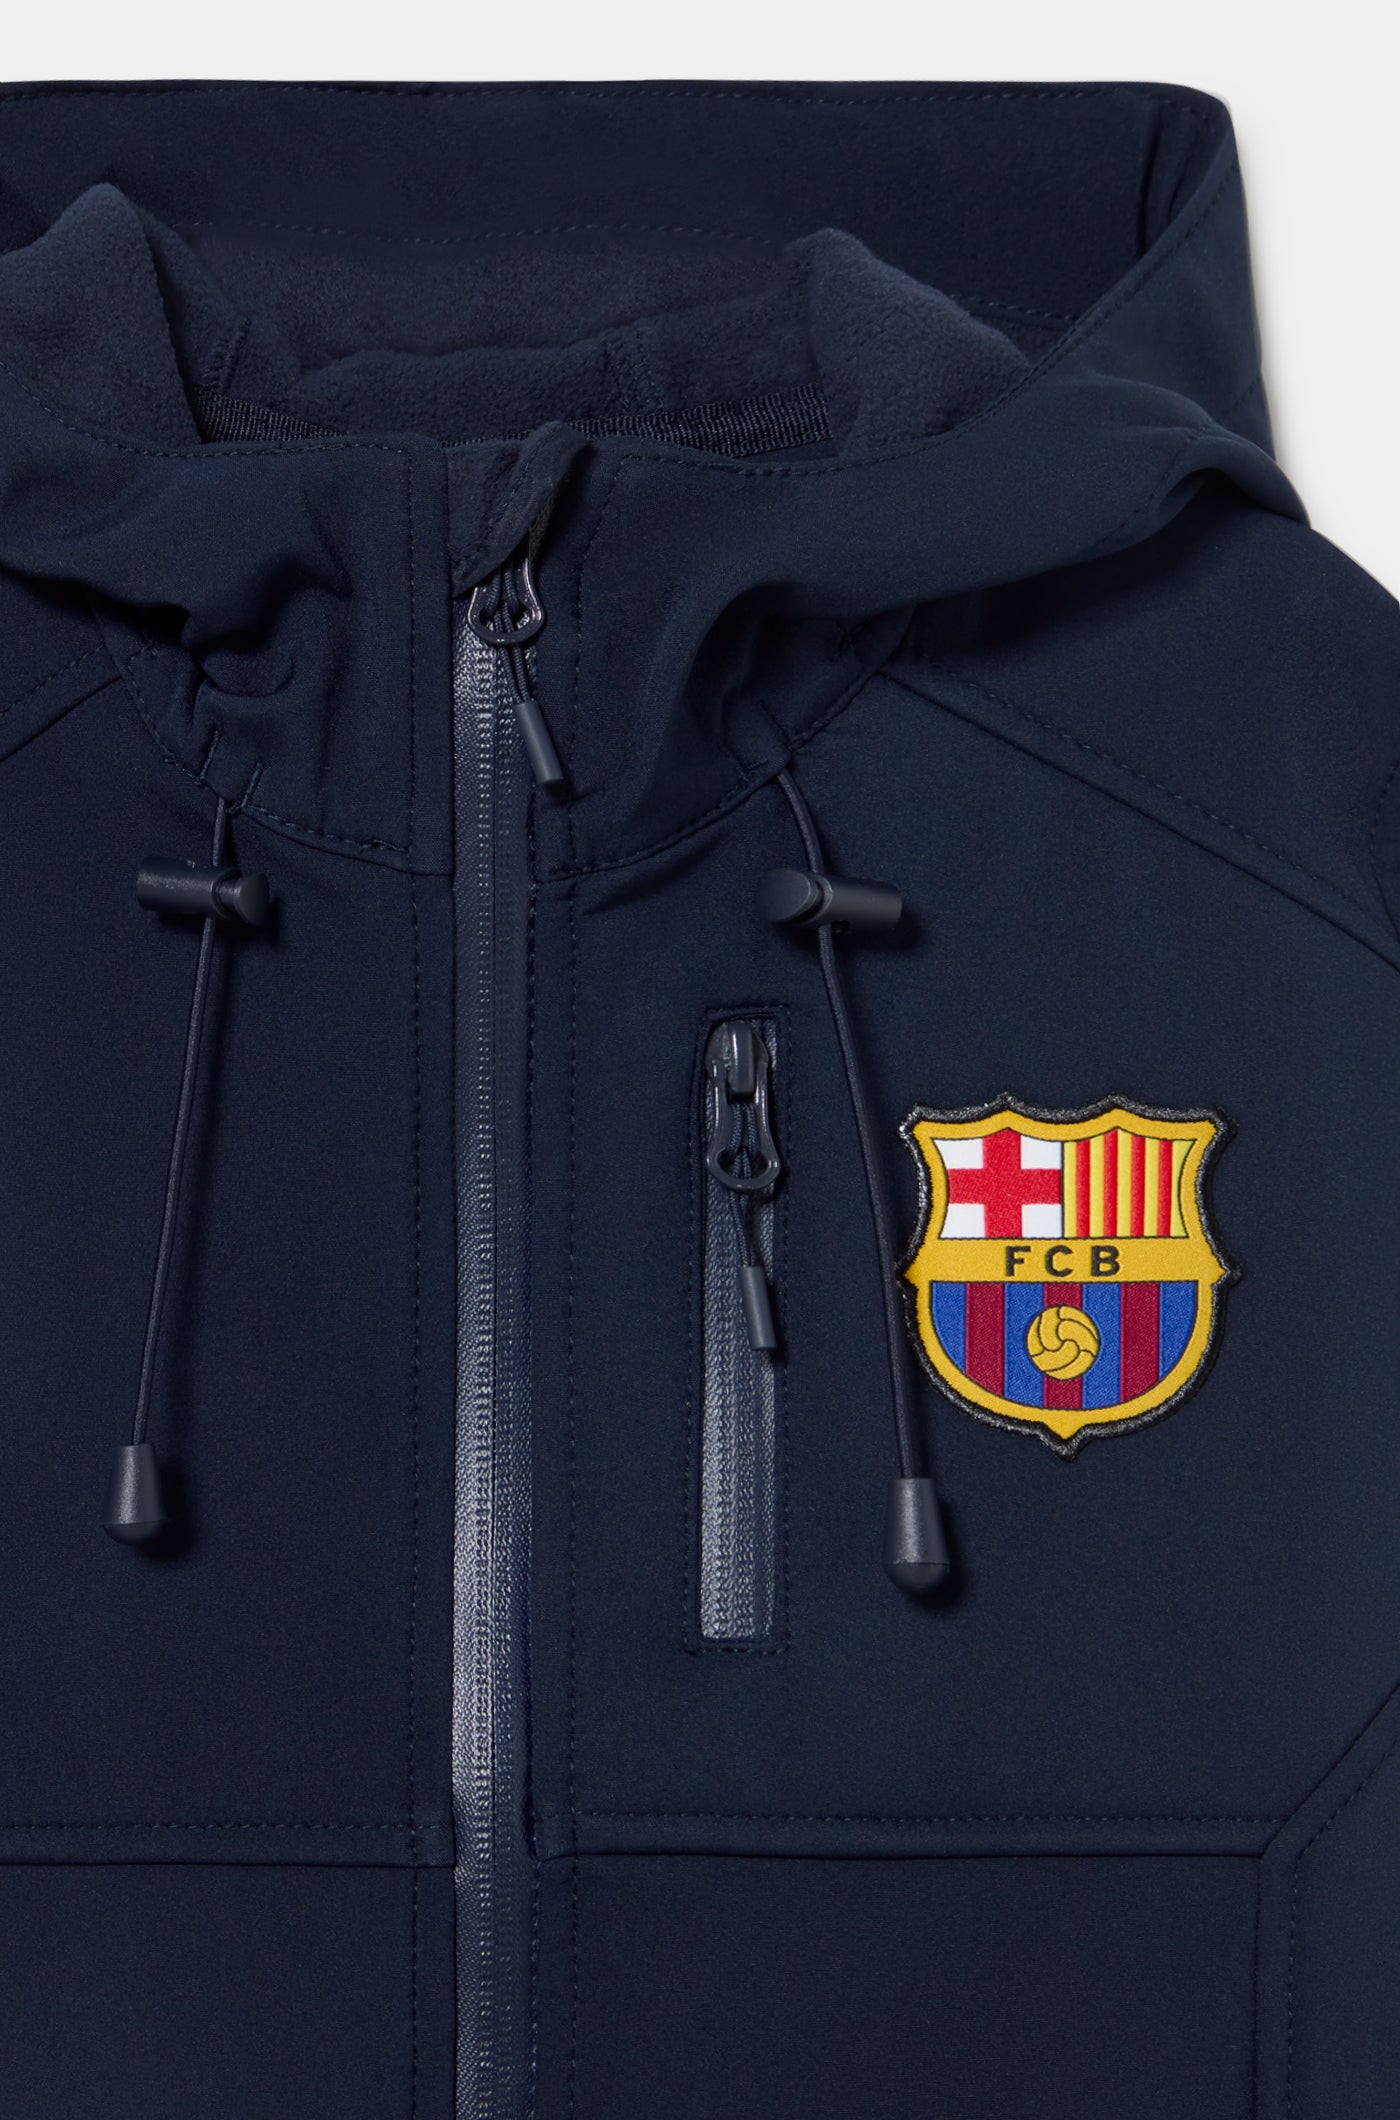 Softshell Jacket Barça Navy blue – Junior – Barça Official Store ...